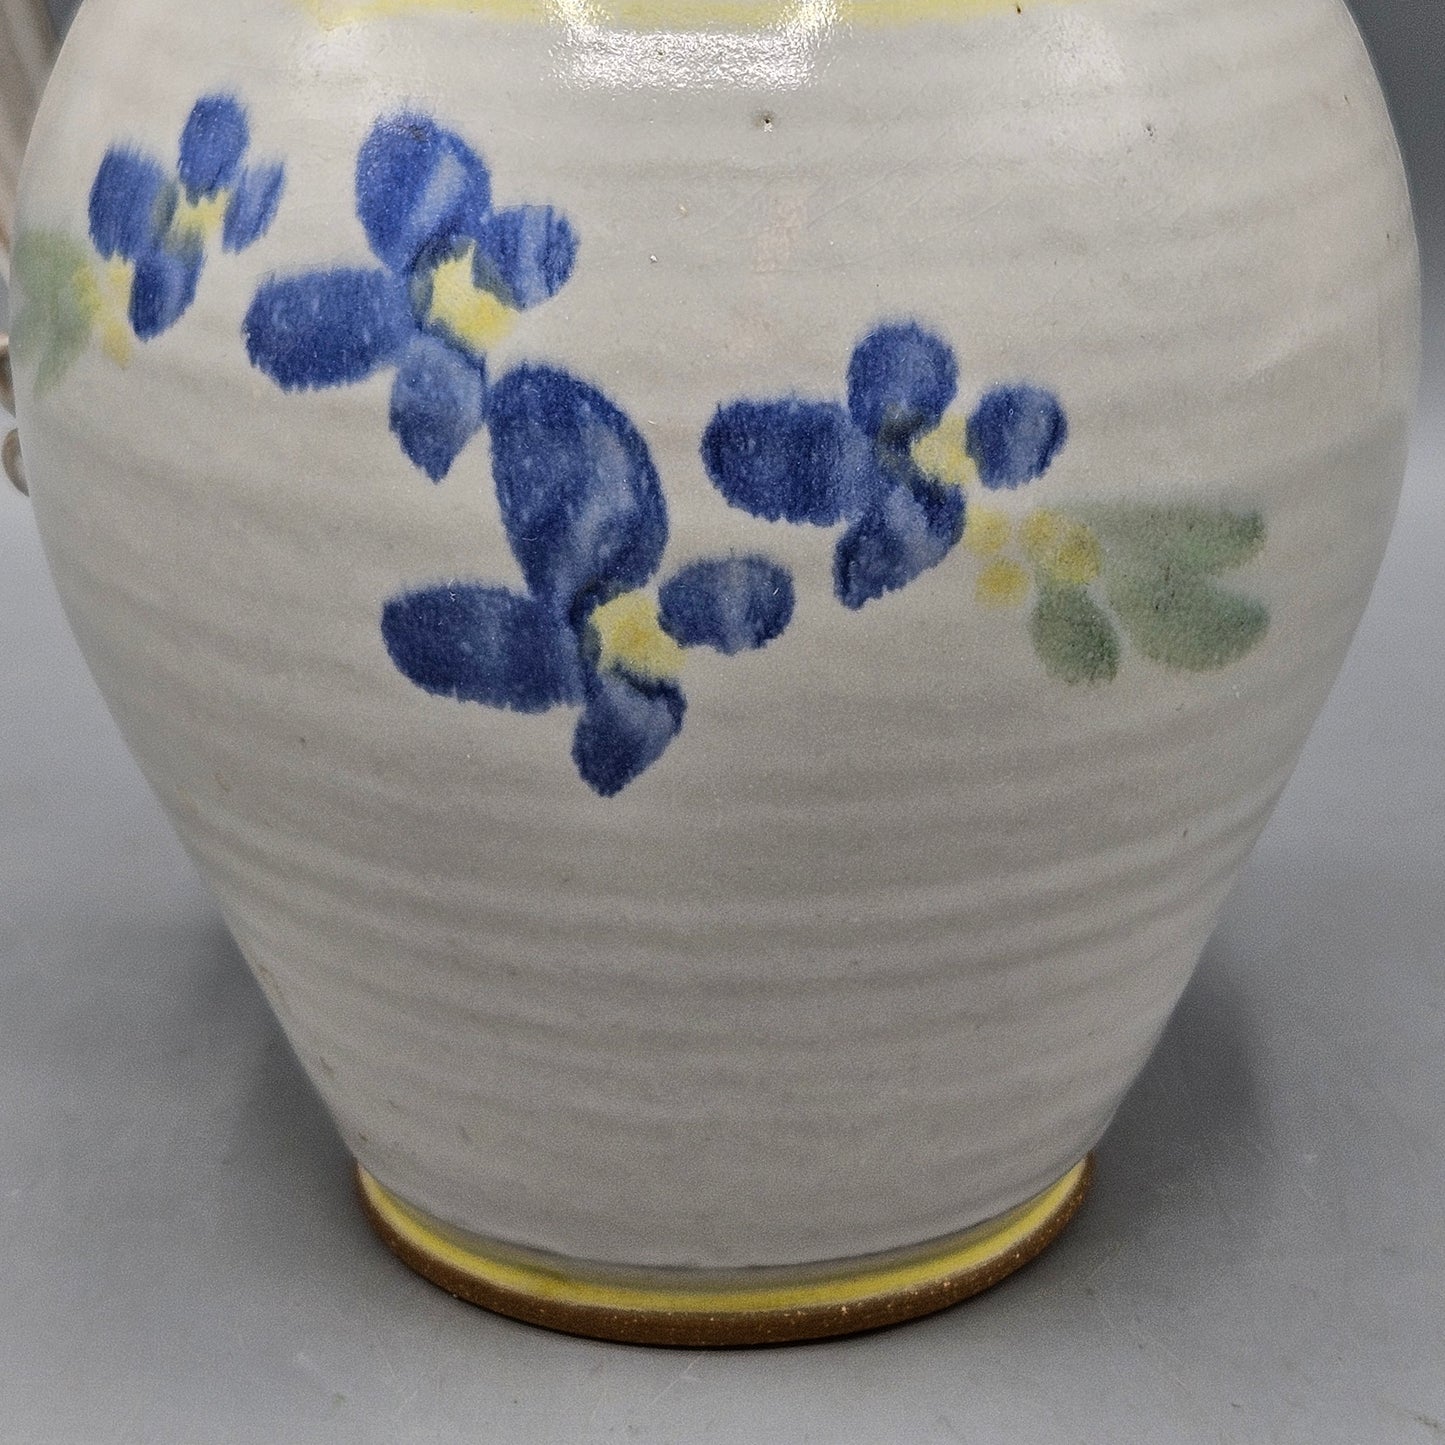 Vintage Signed Stoneware Pitcher with Floral Design